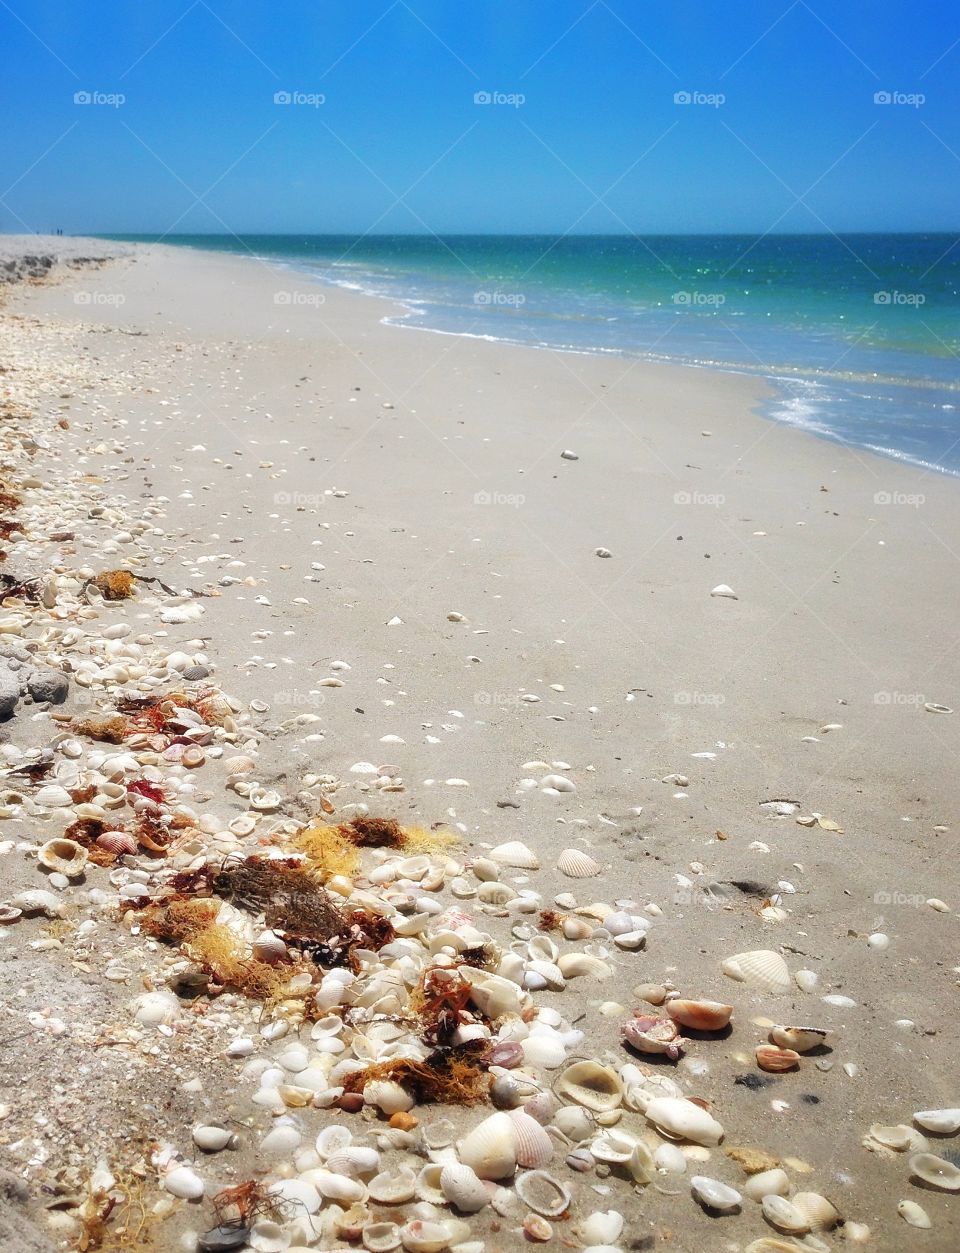 Sea shells line a sandy beach caressed by warm ocean waves